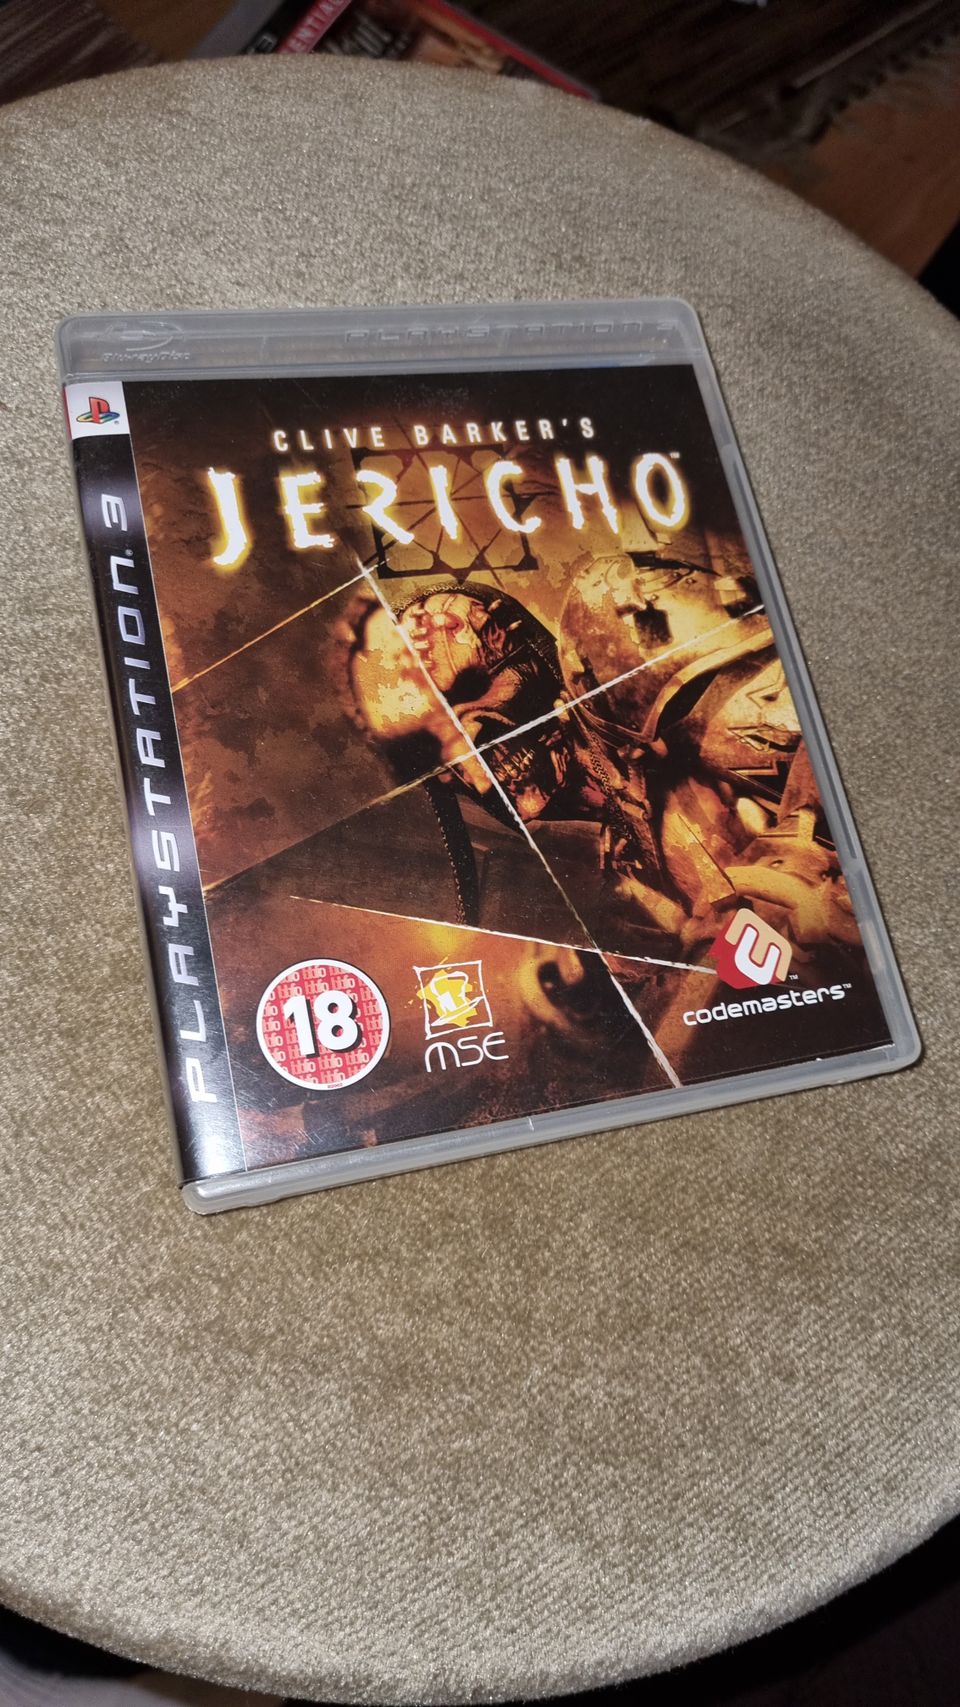 PS3/Playstation 3: Clive Barker's Jericho